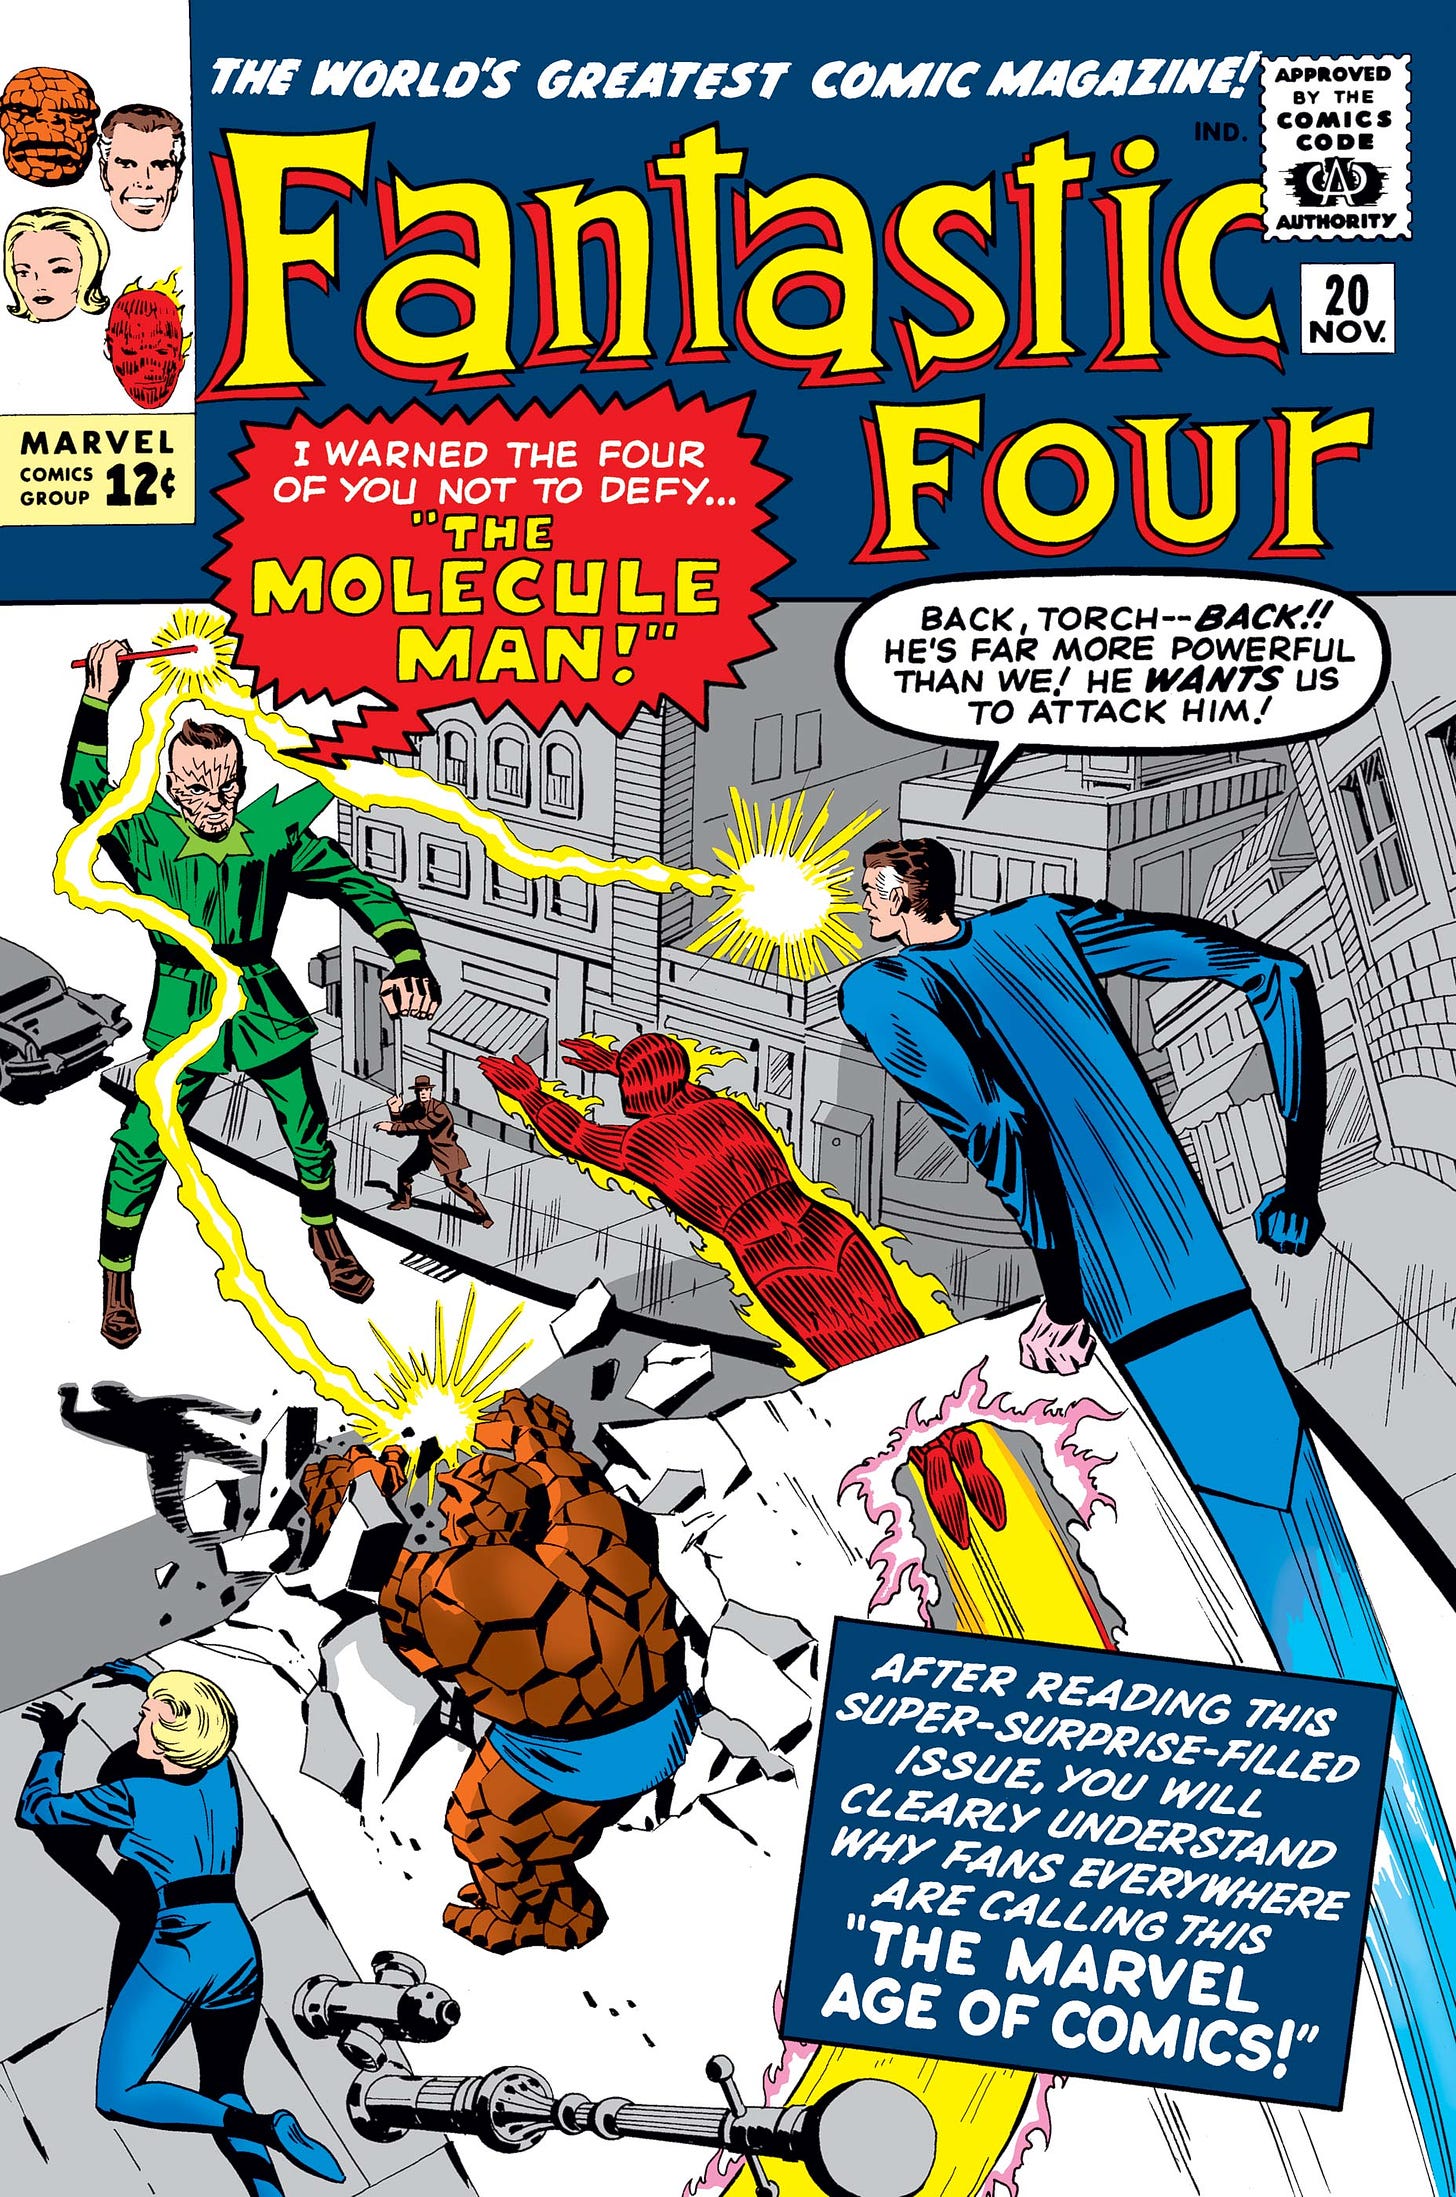 Fantastic Four (1961) #20 | Comic Issues | Marvel